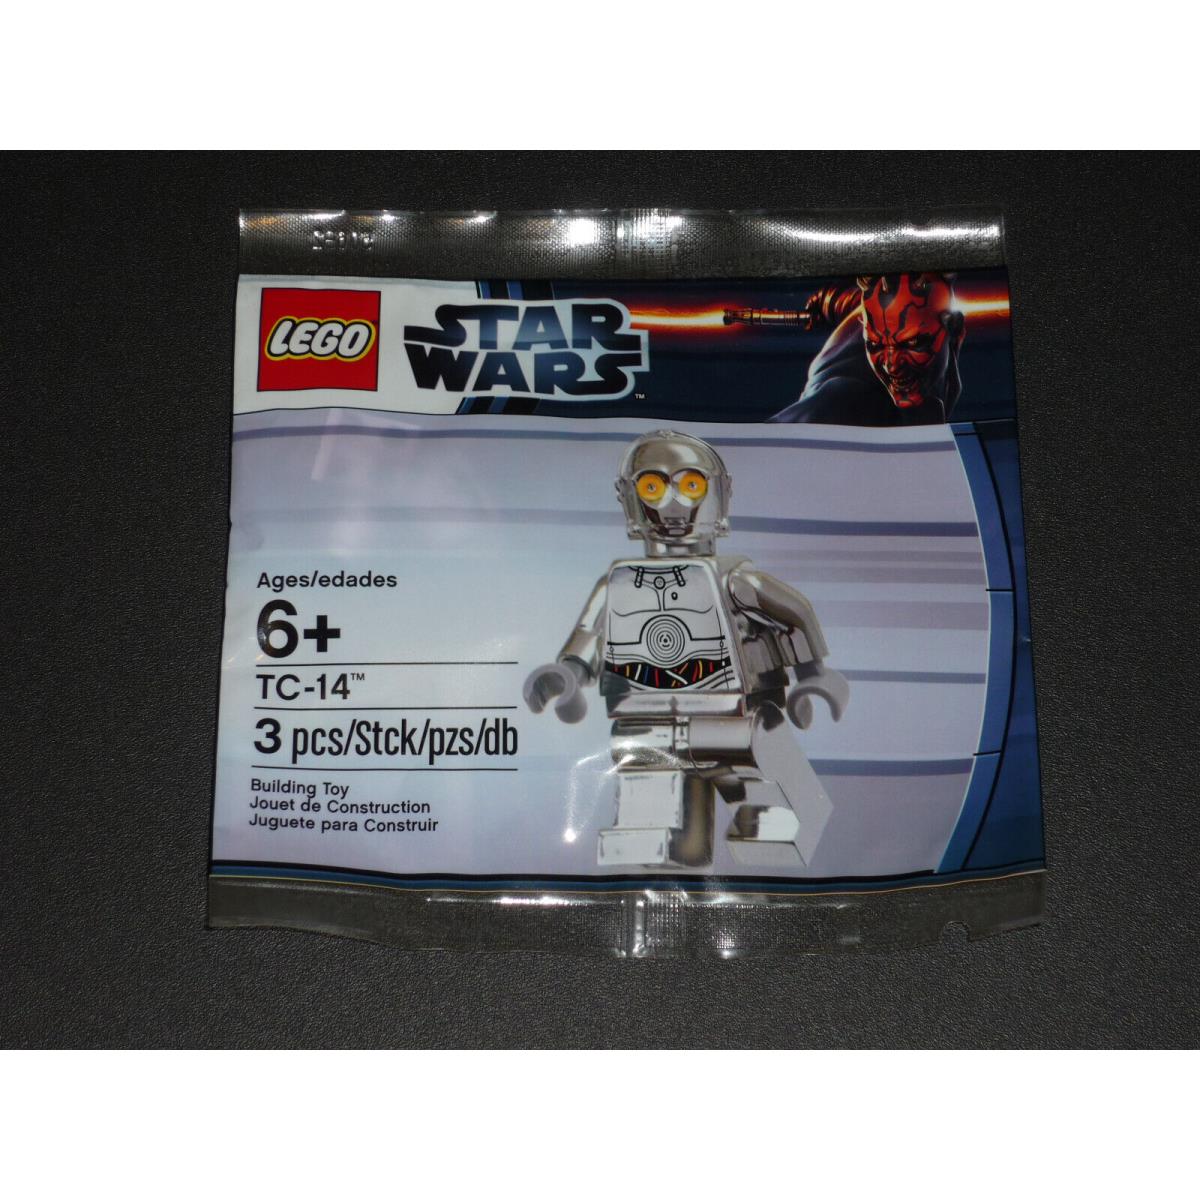 Lego 5000063 Star Wars Chrome TC-14 Collectible Minifigure Polybag